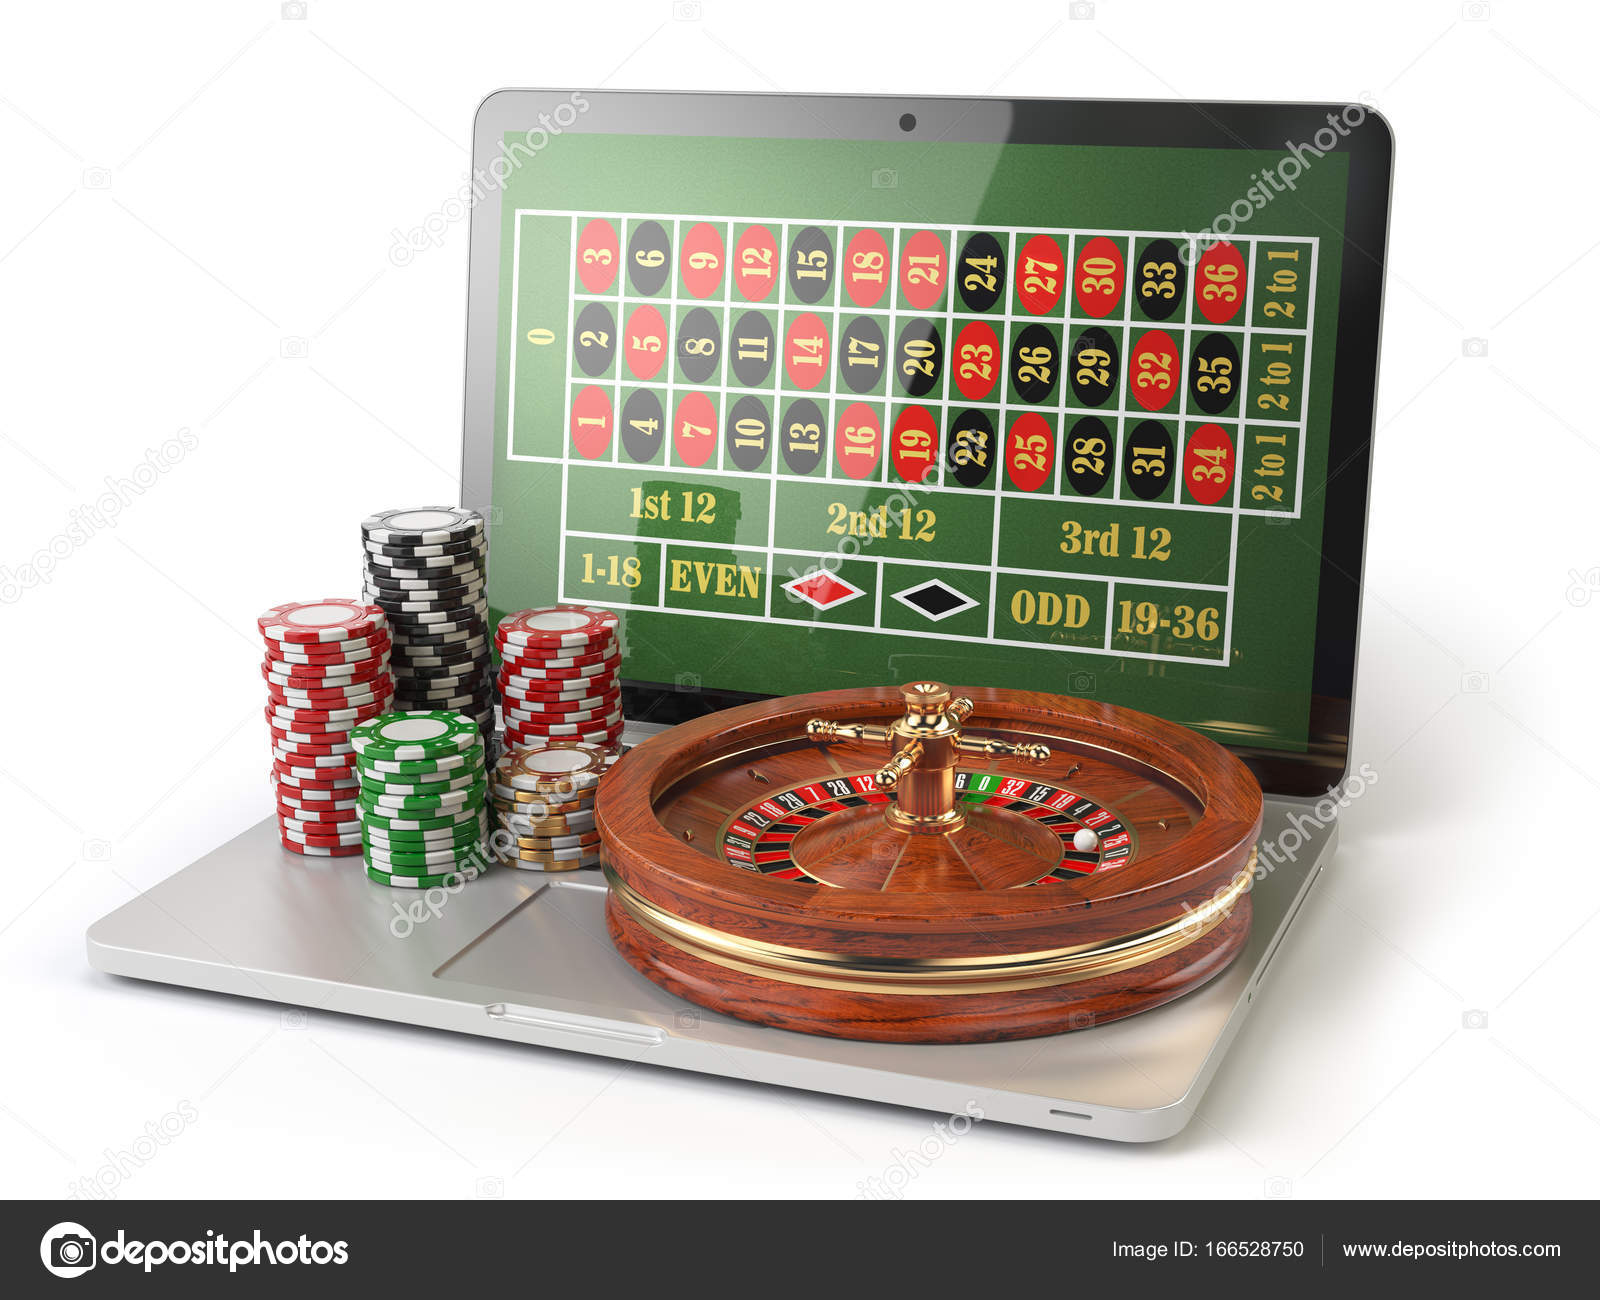 Real casino slots online real money 777spinslot com